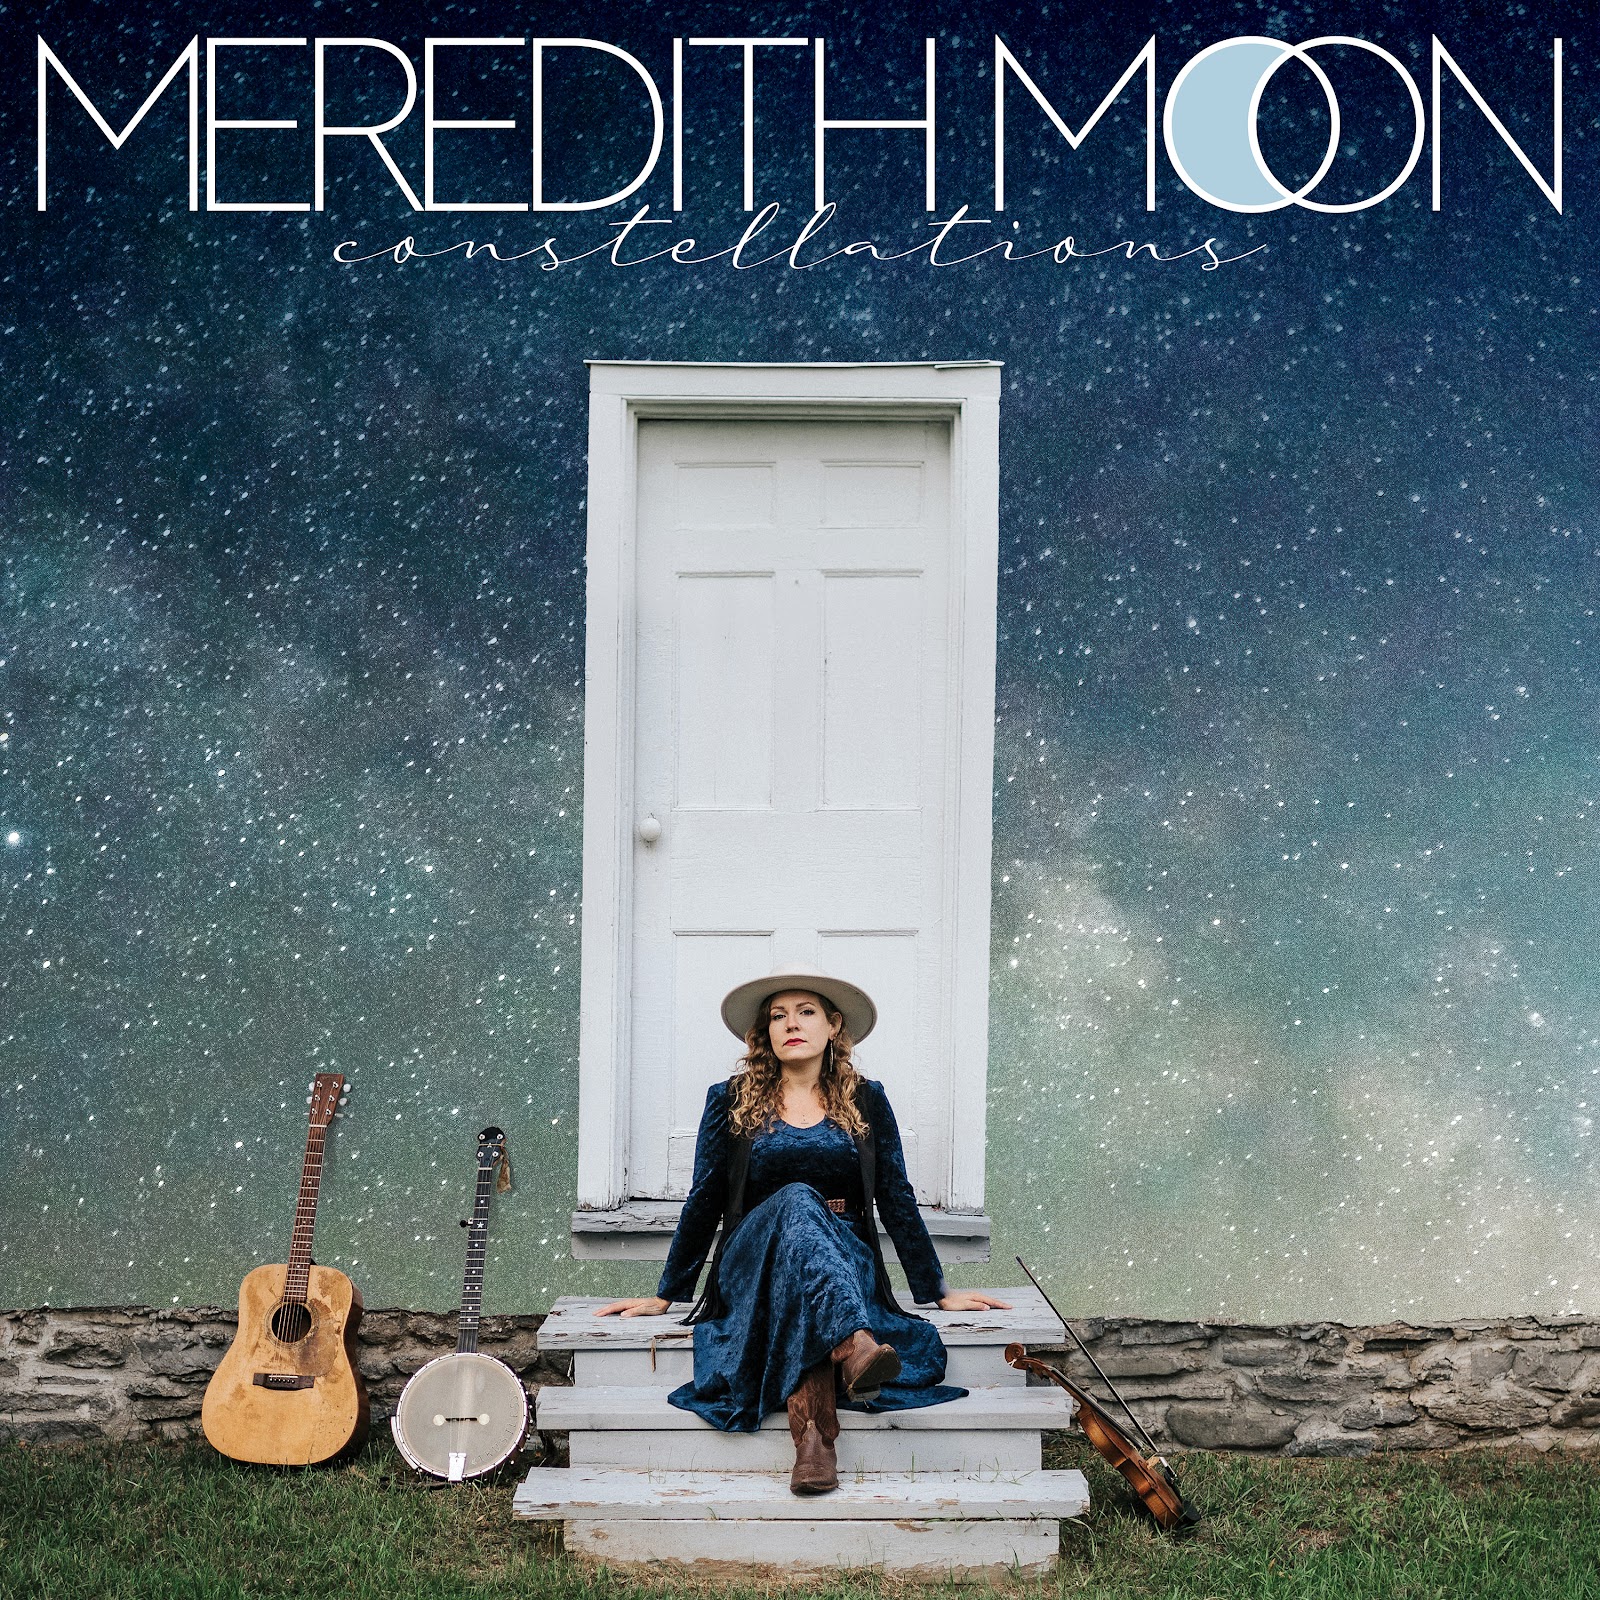 Stars Align for Toronto Singer-Songwriter Meredith Moon (Gordon Lightfoot's Daughter) With 'Constellations' Album